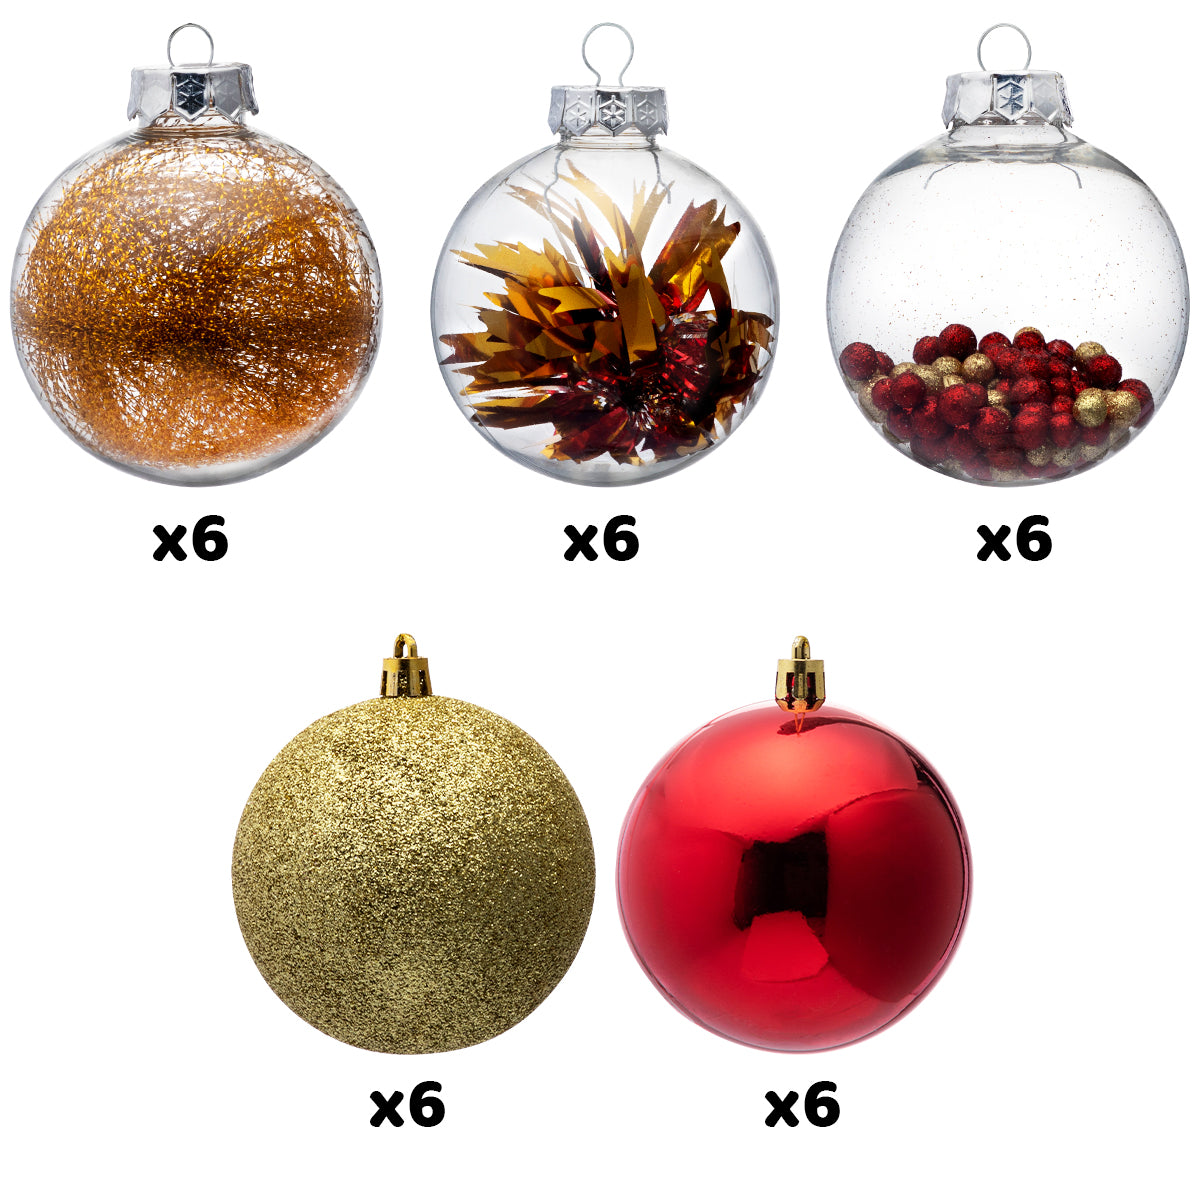 Assorted Christmas Ball Ornaments, 30 Pcs